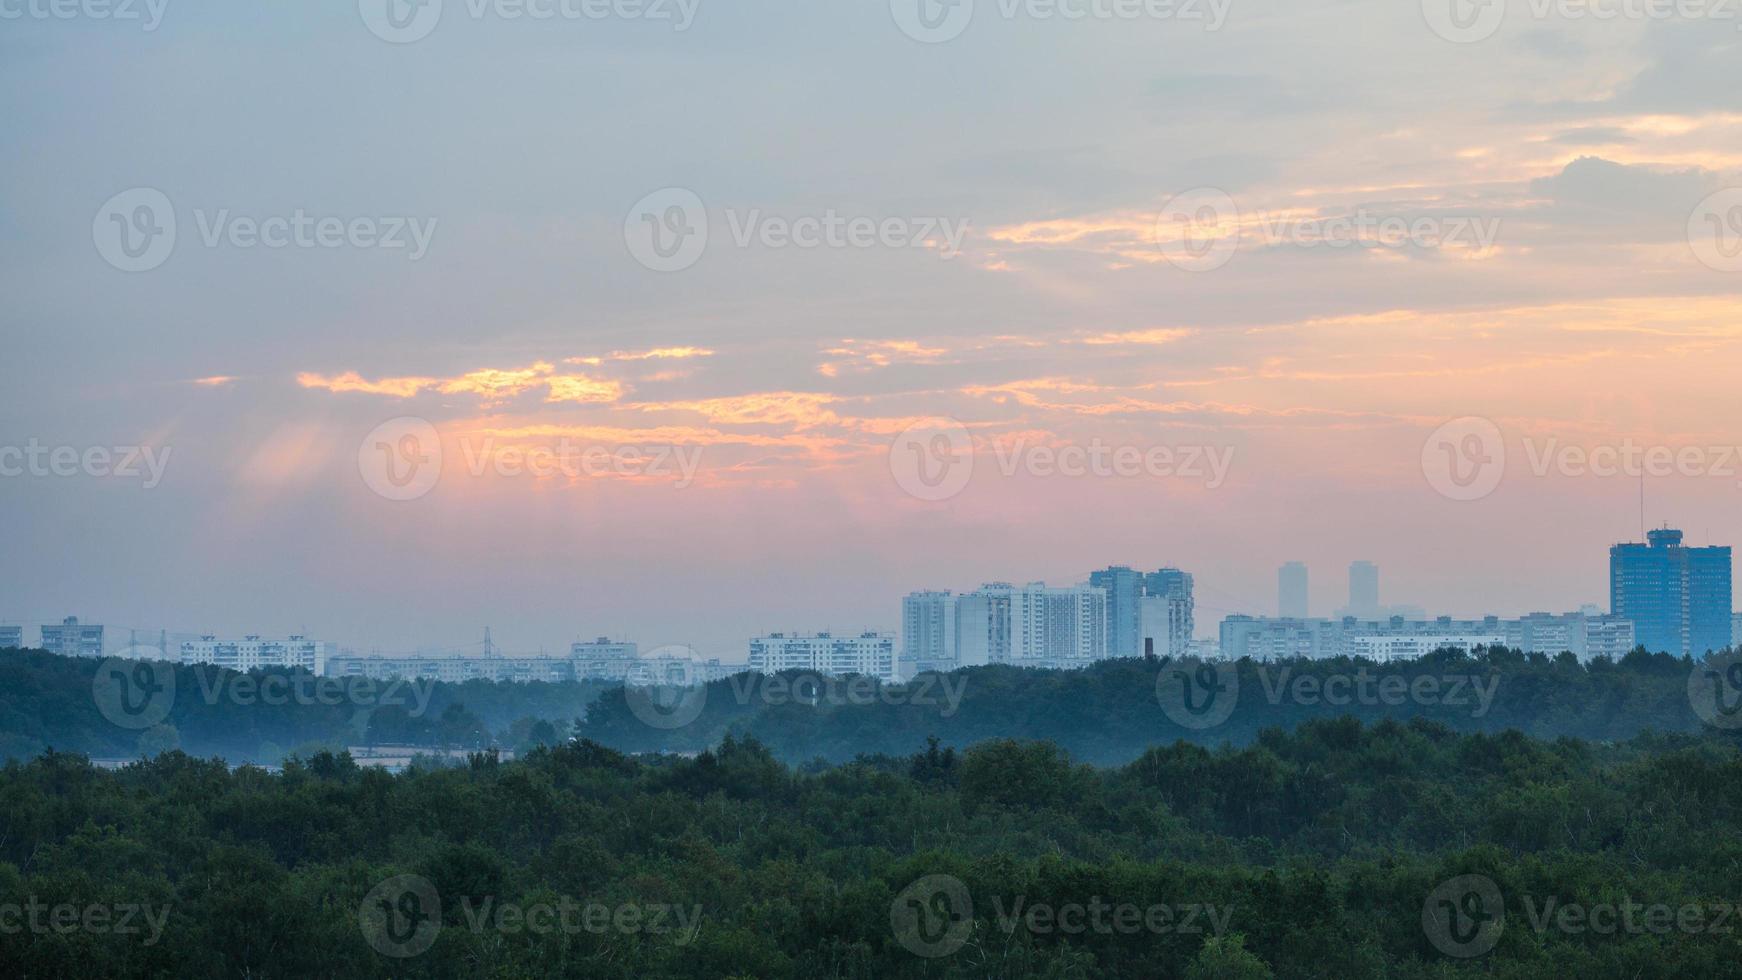 roze zonnestralen in zonsopkomst lucht over- Moskou stad foto